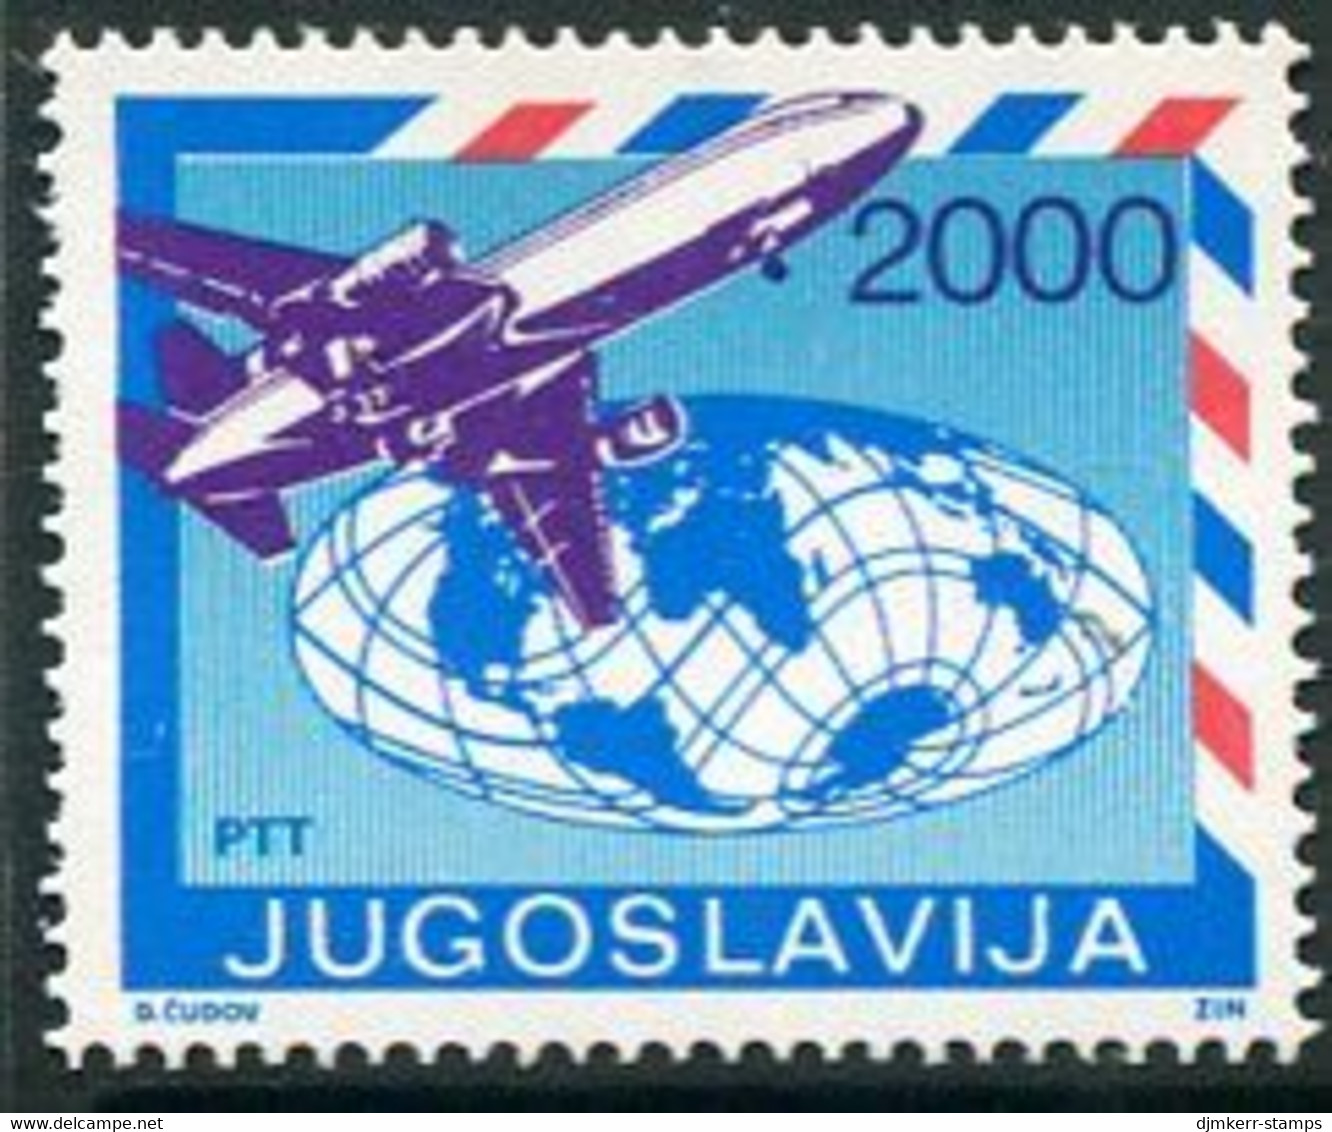 YUGOSLAVIA 1988 Airmail Definitive 2000 D. MNH / **.  Michel 2296 - Ongebruikt